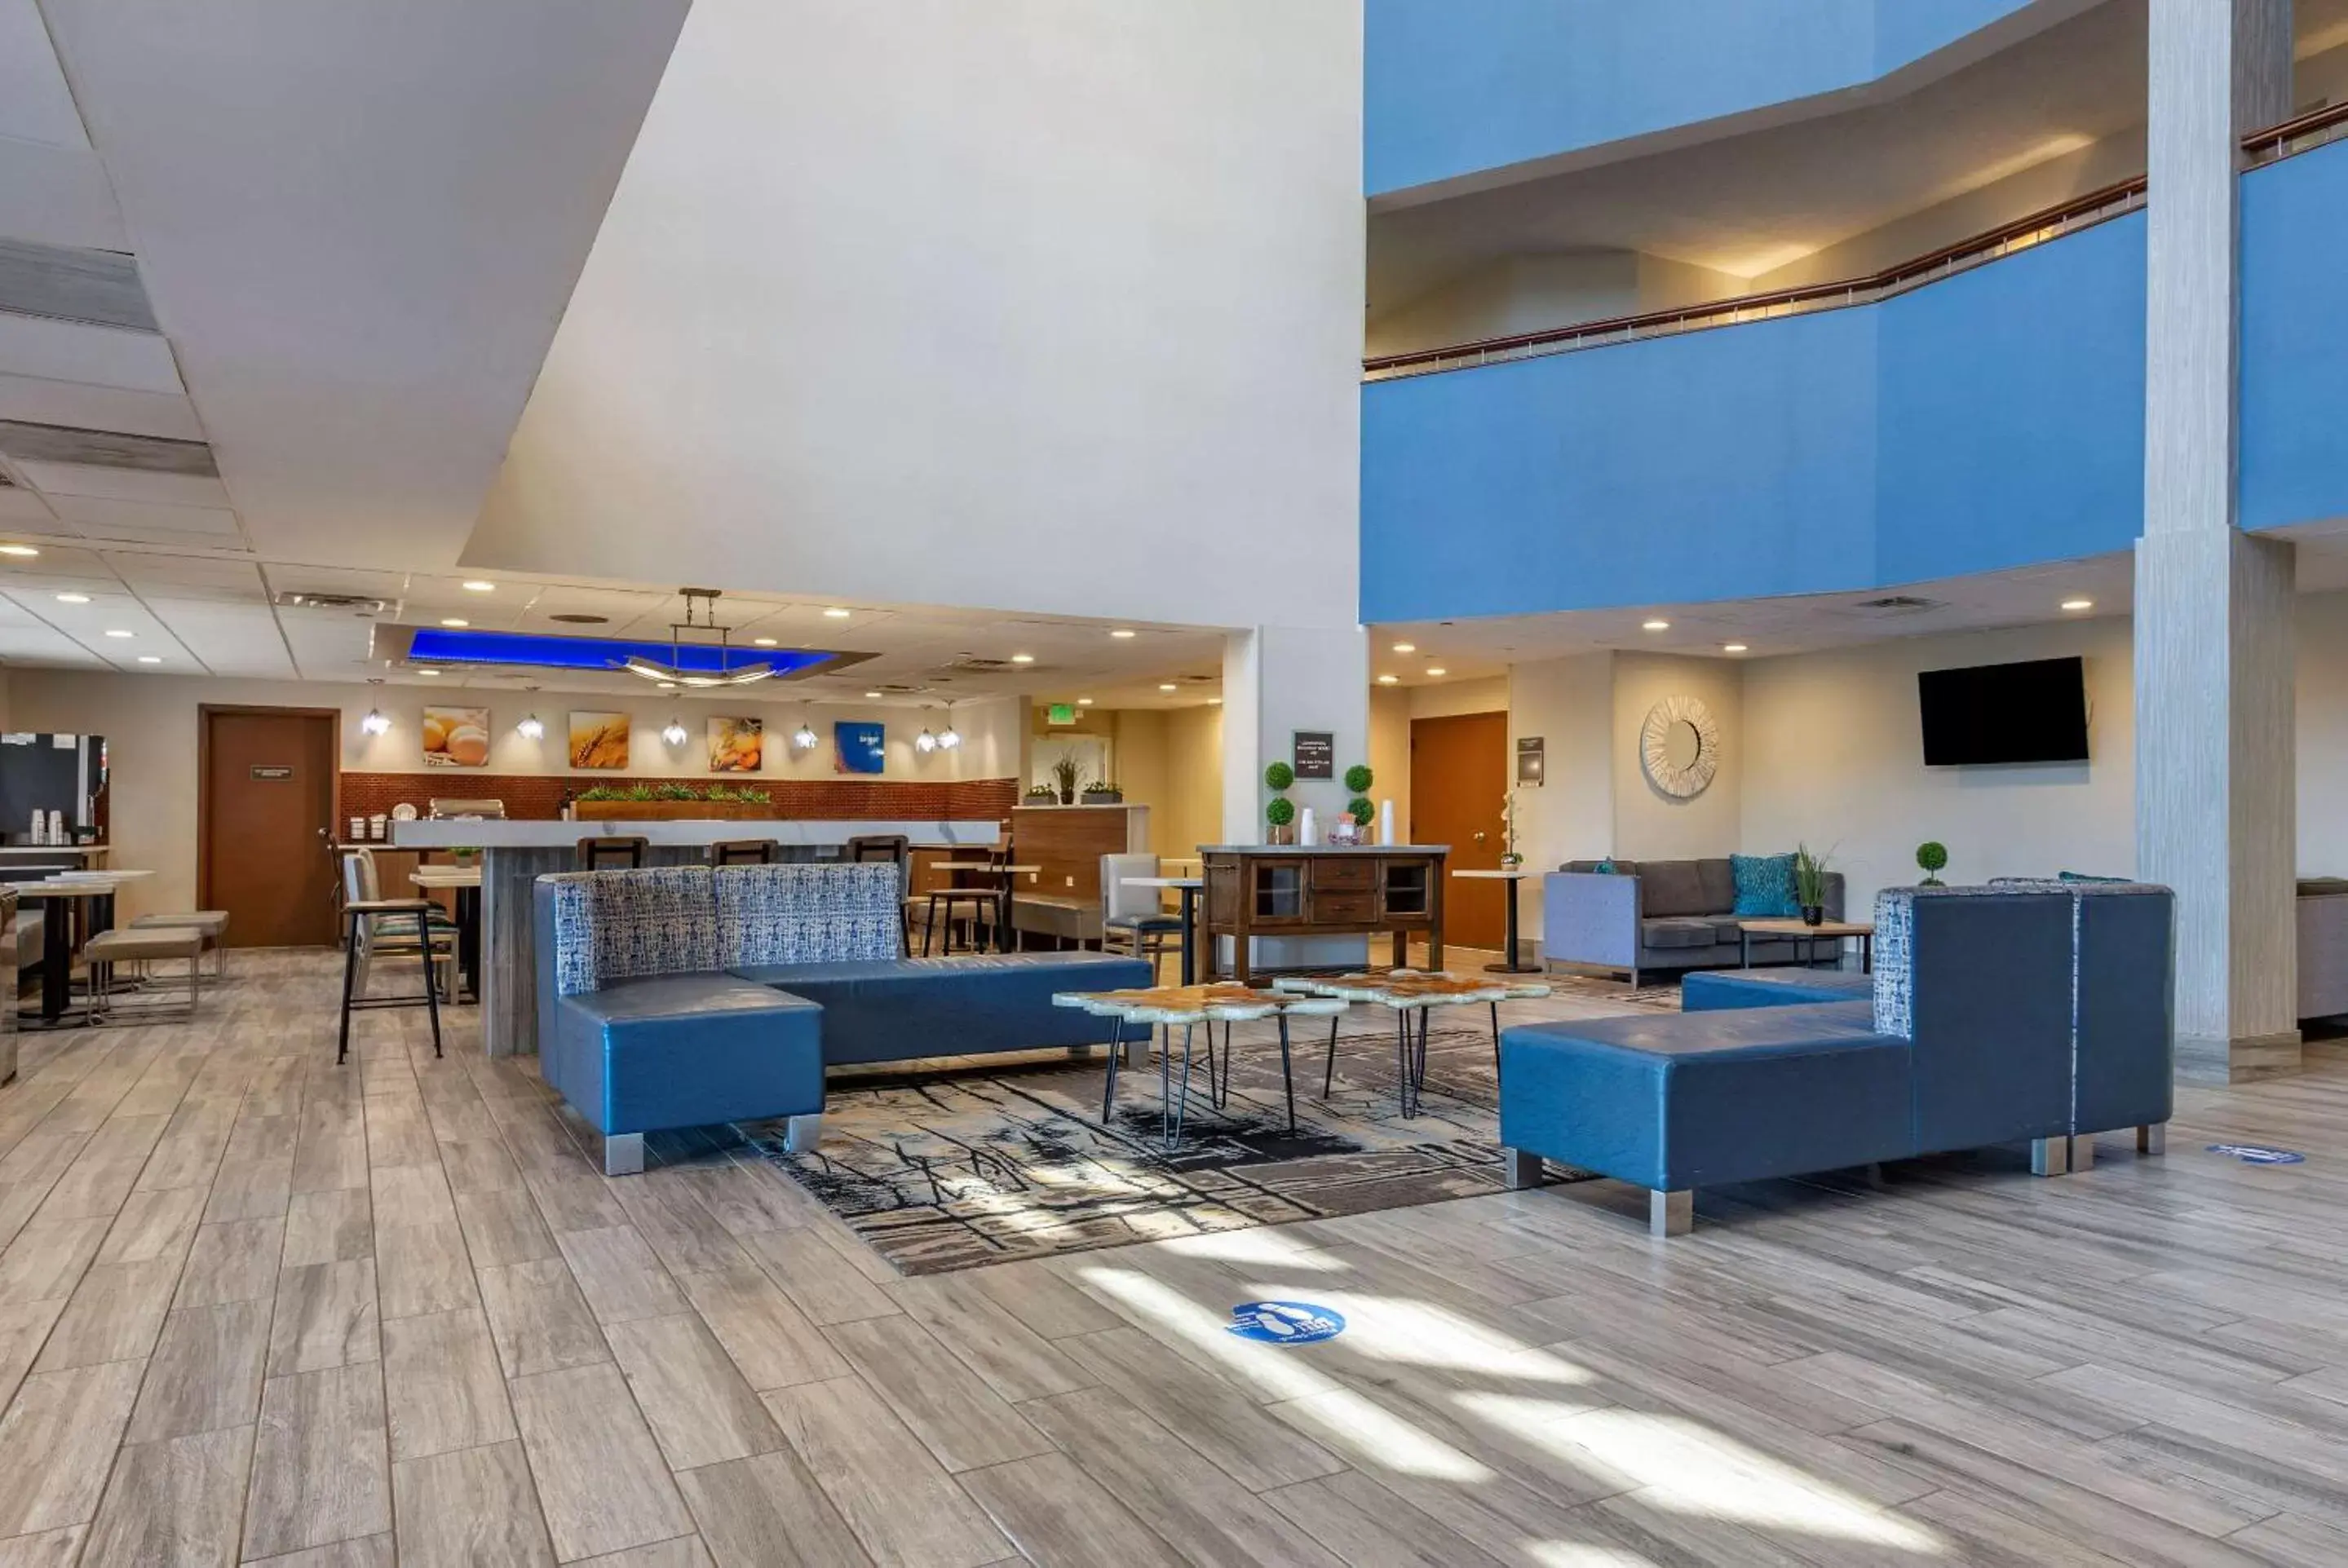 Lobby or reception in MainStay Suites Horsham - Philadelphia